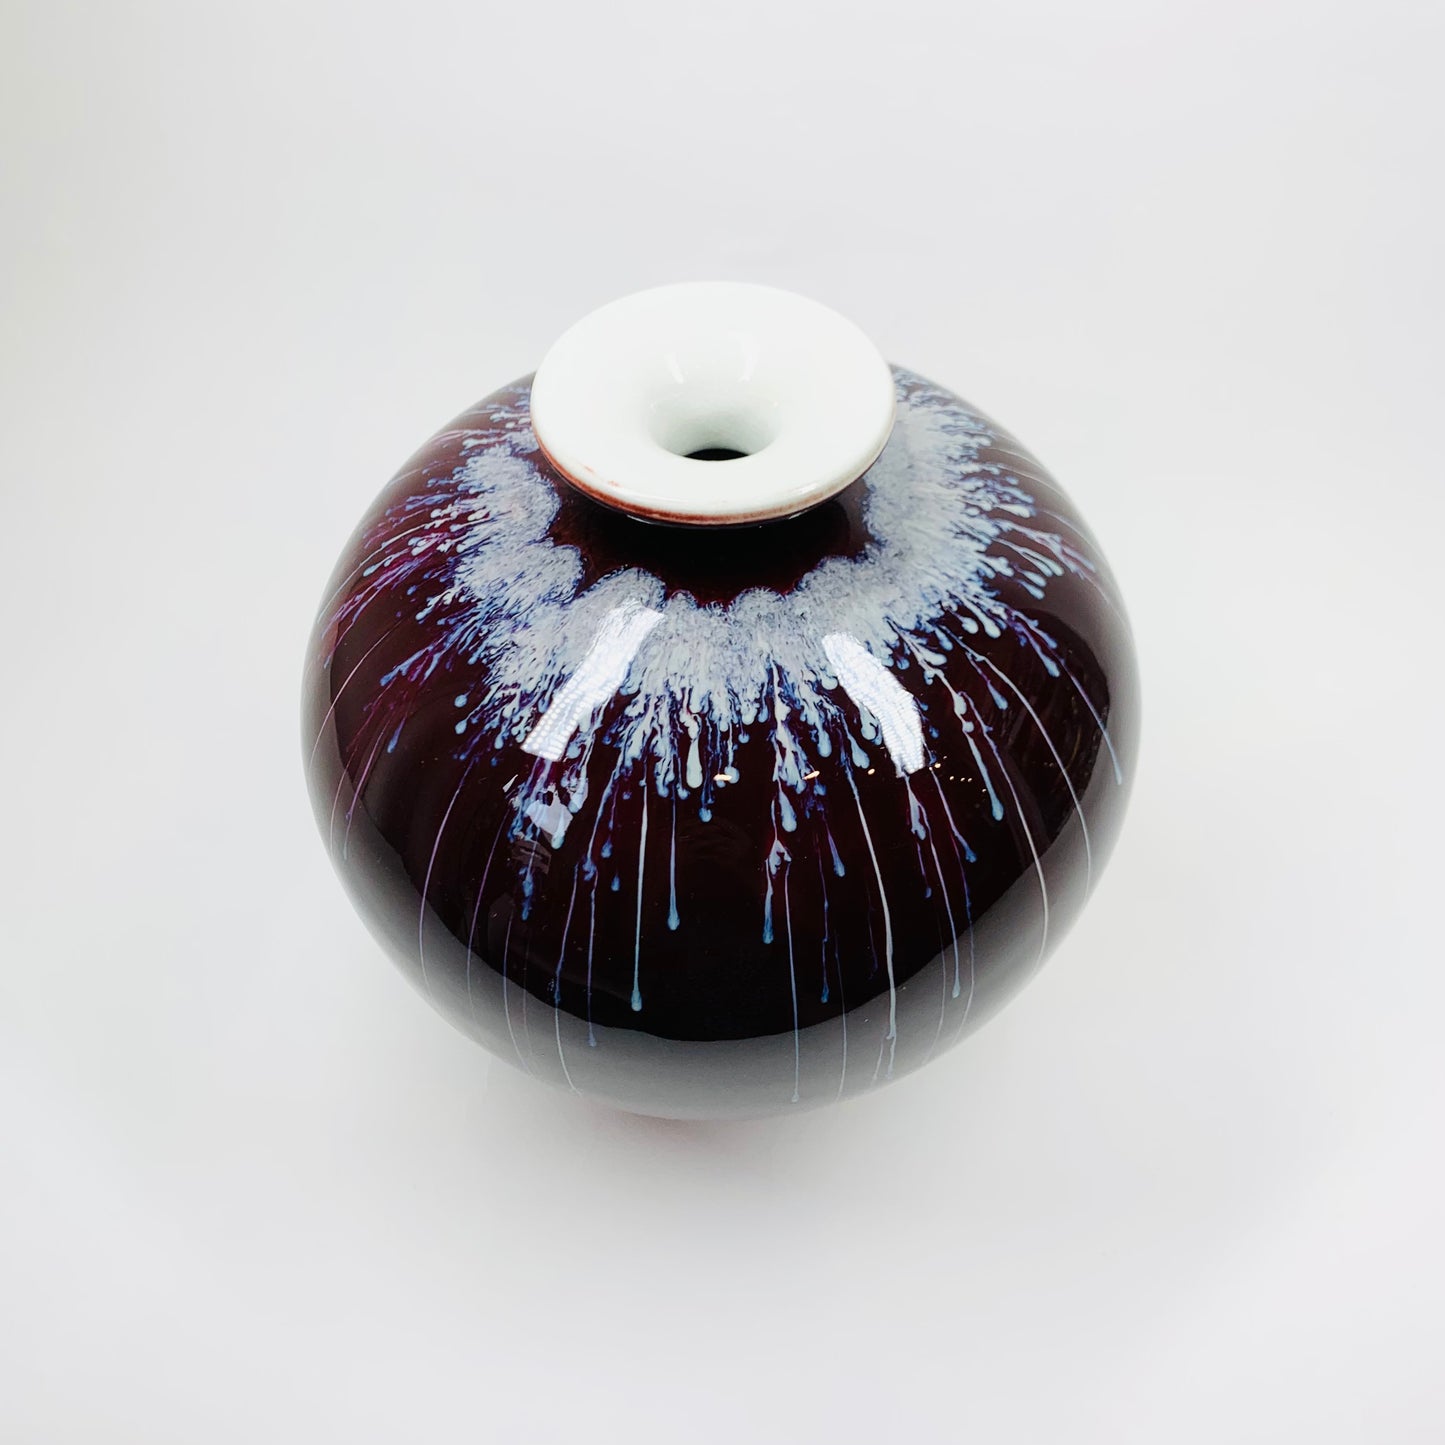 Vintage Chinese maroon bleed flambé pottery squat vase